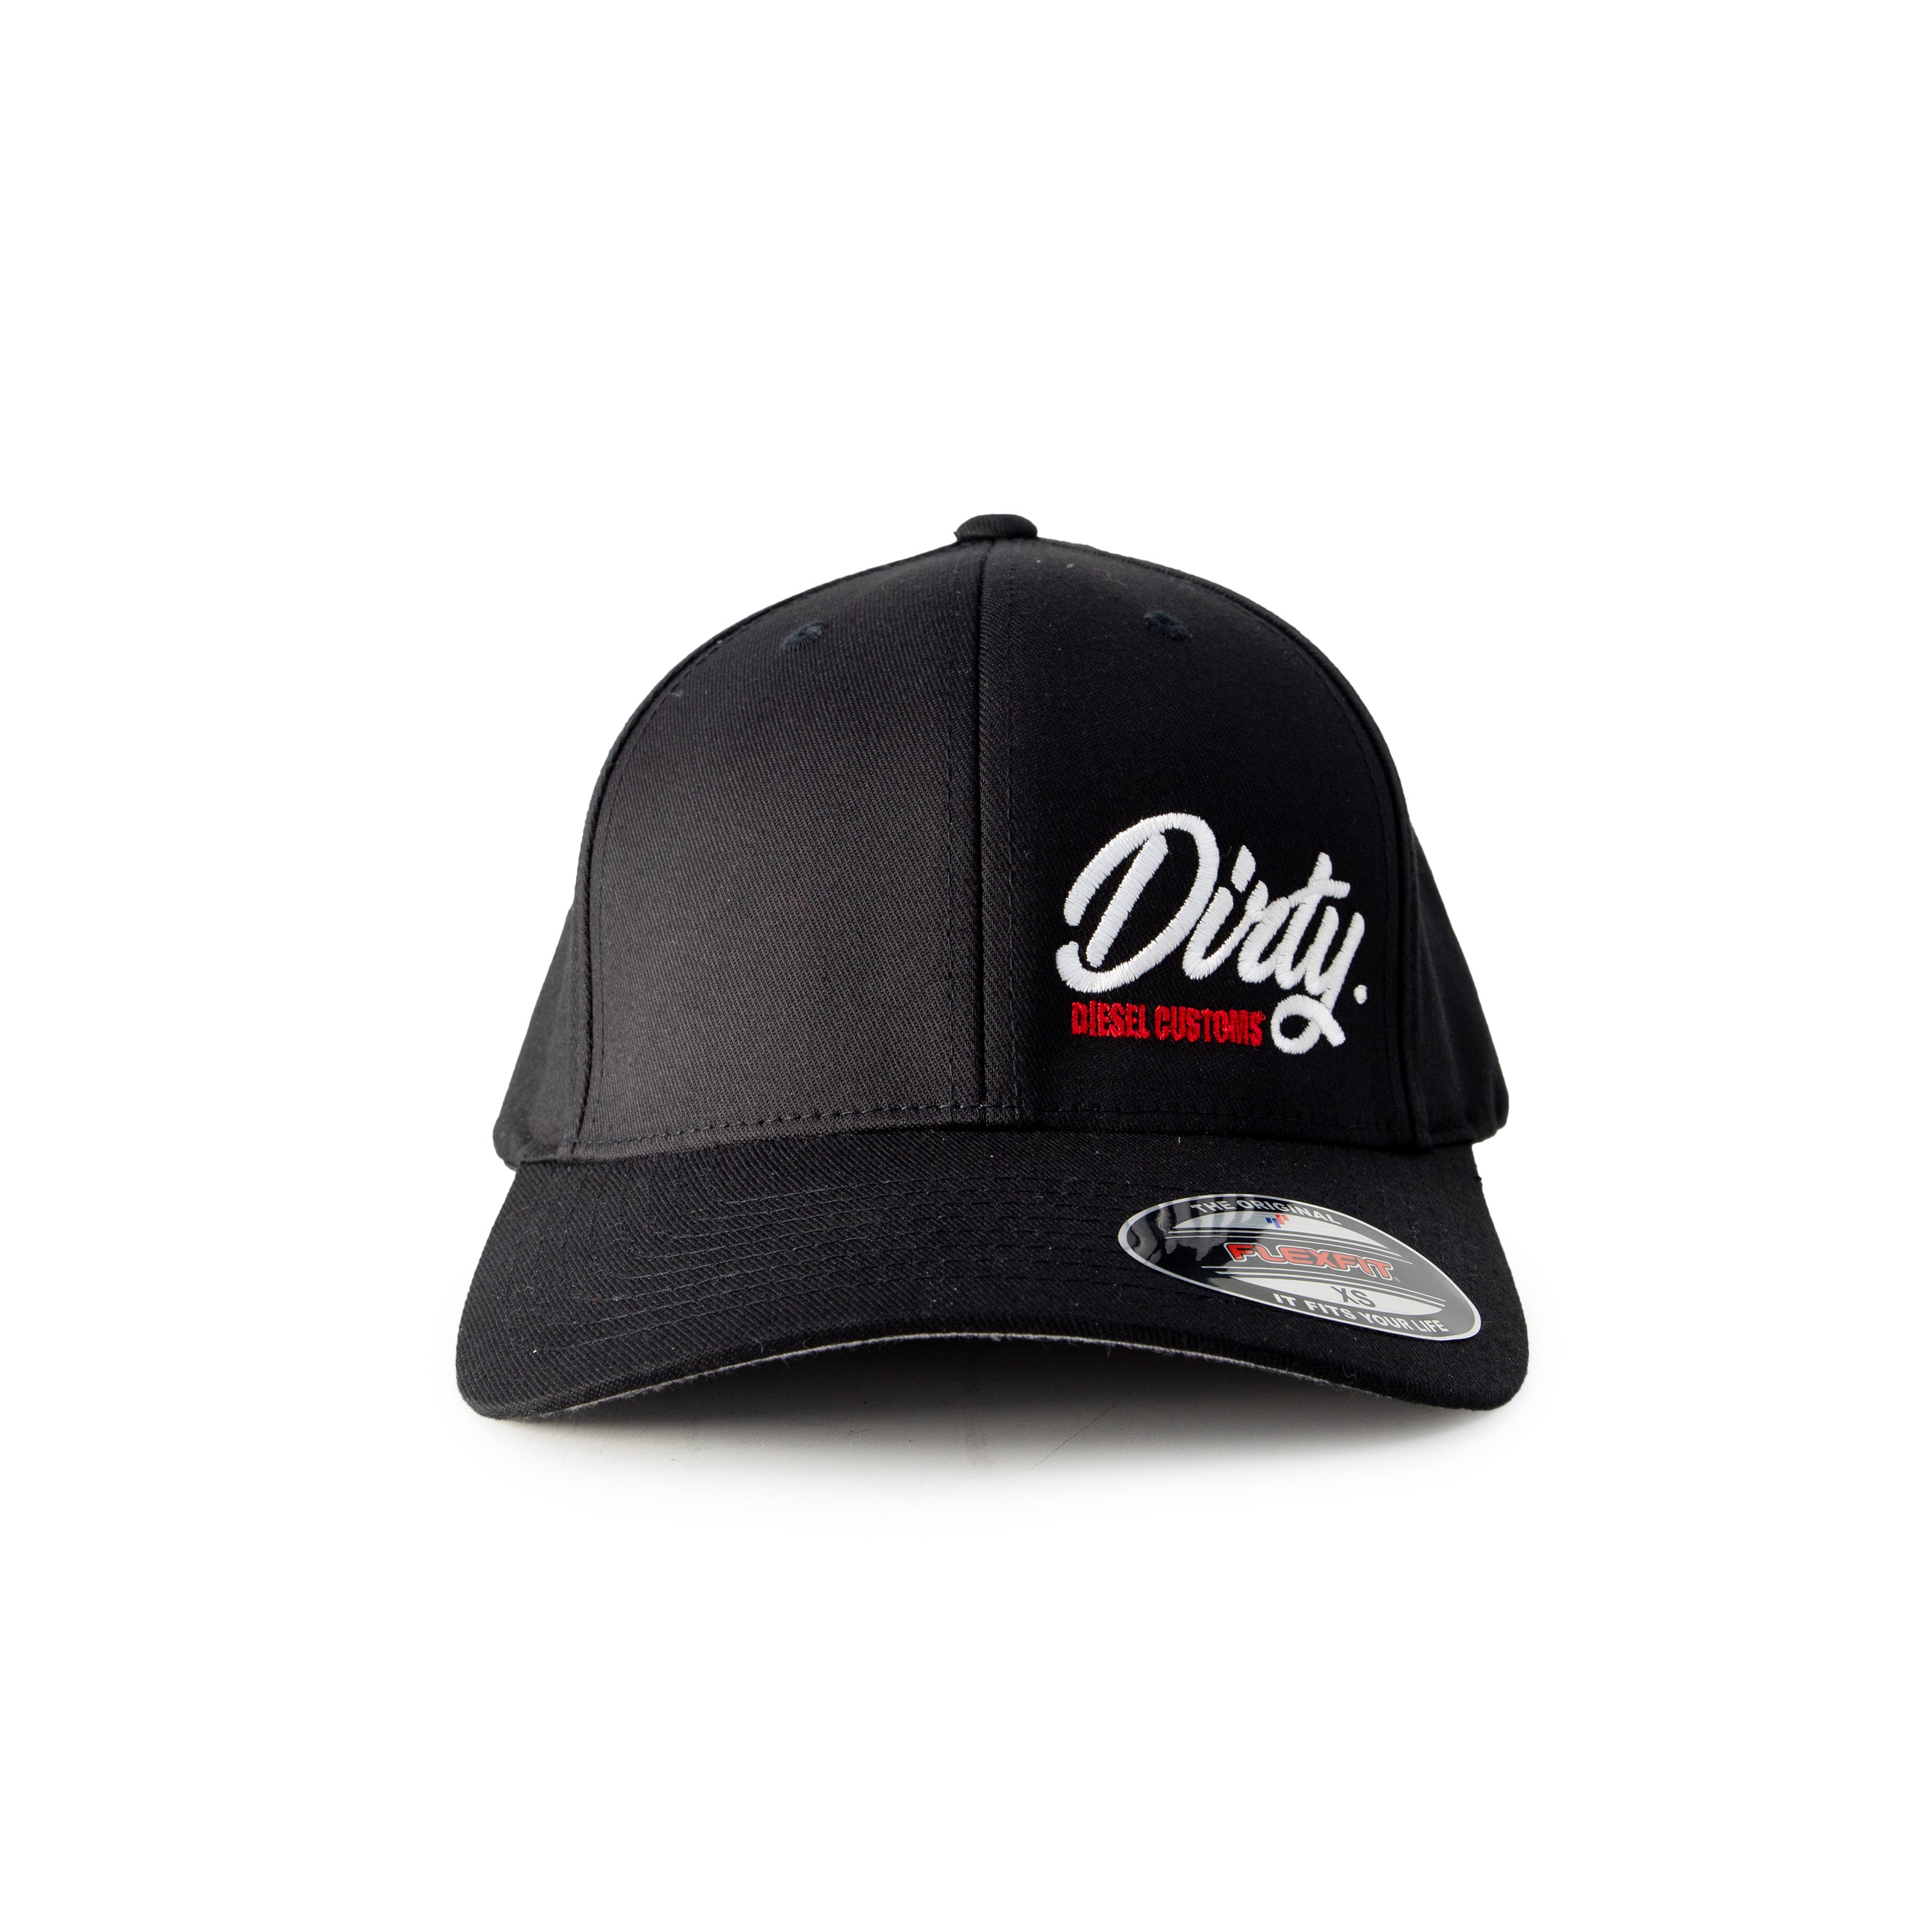 Dirty Diesel Customs Classic Hats